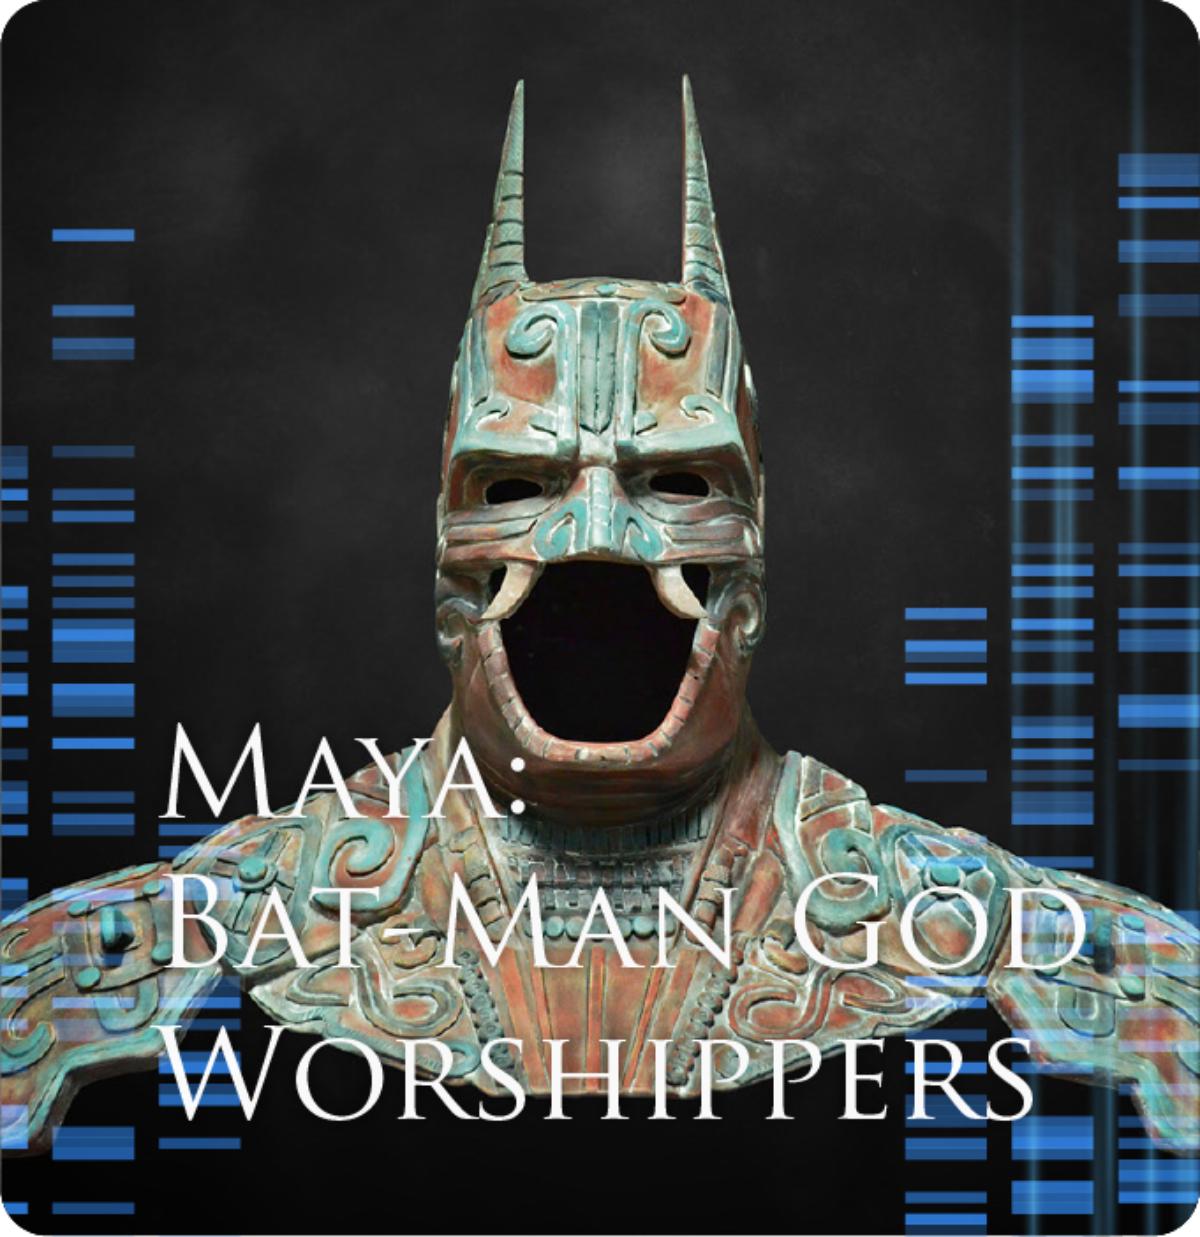 Maya Bat-Man God Worshippers